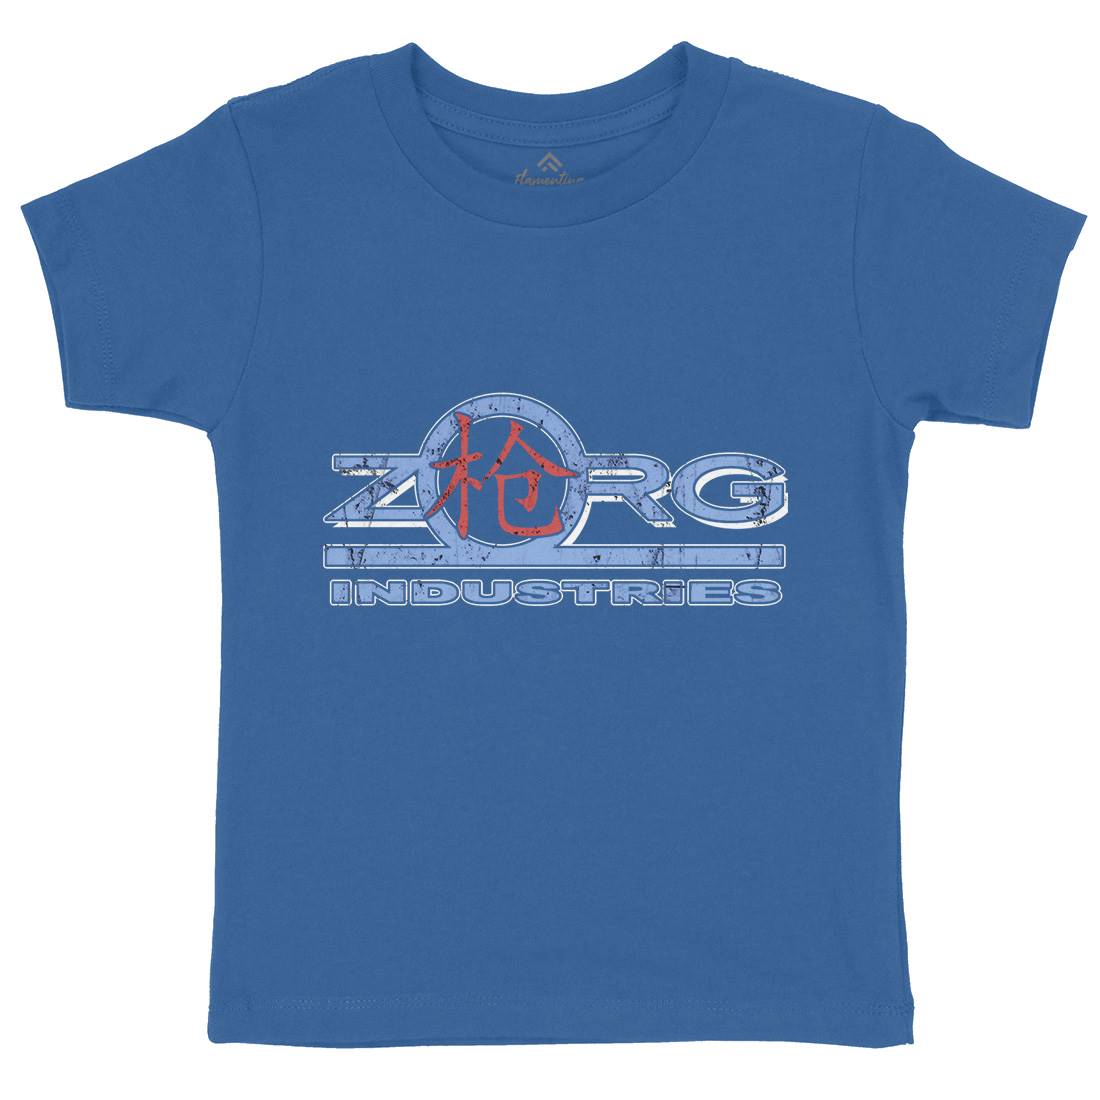 Zorg Ind Kids Organic Crew Neck T-Shirt Space D105